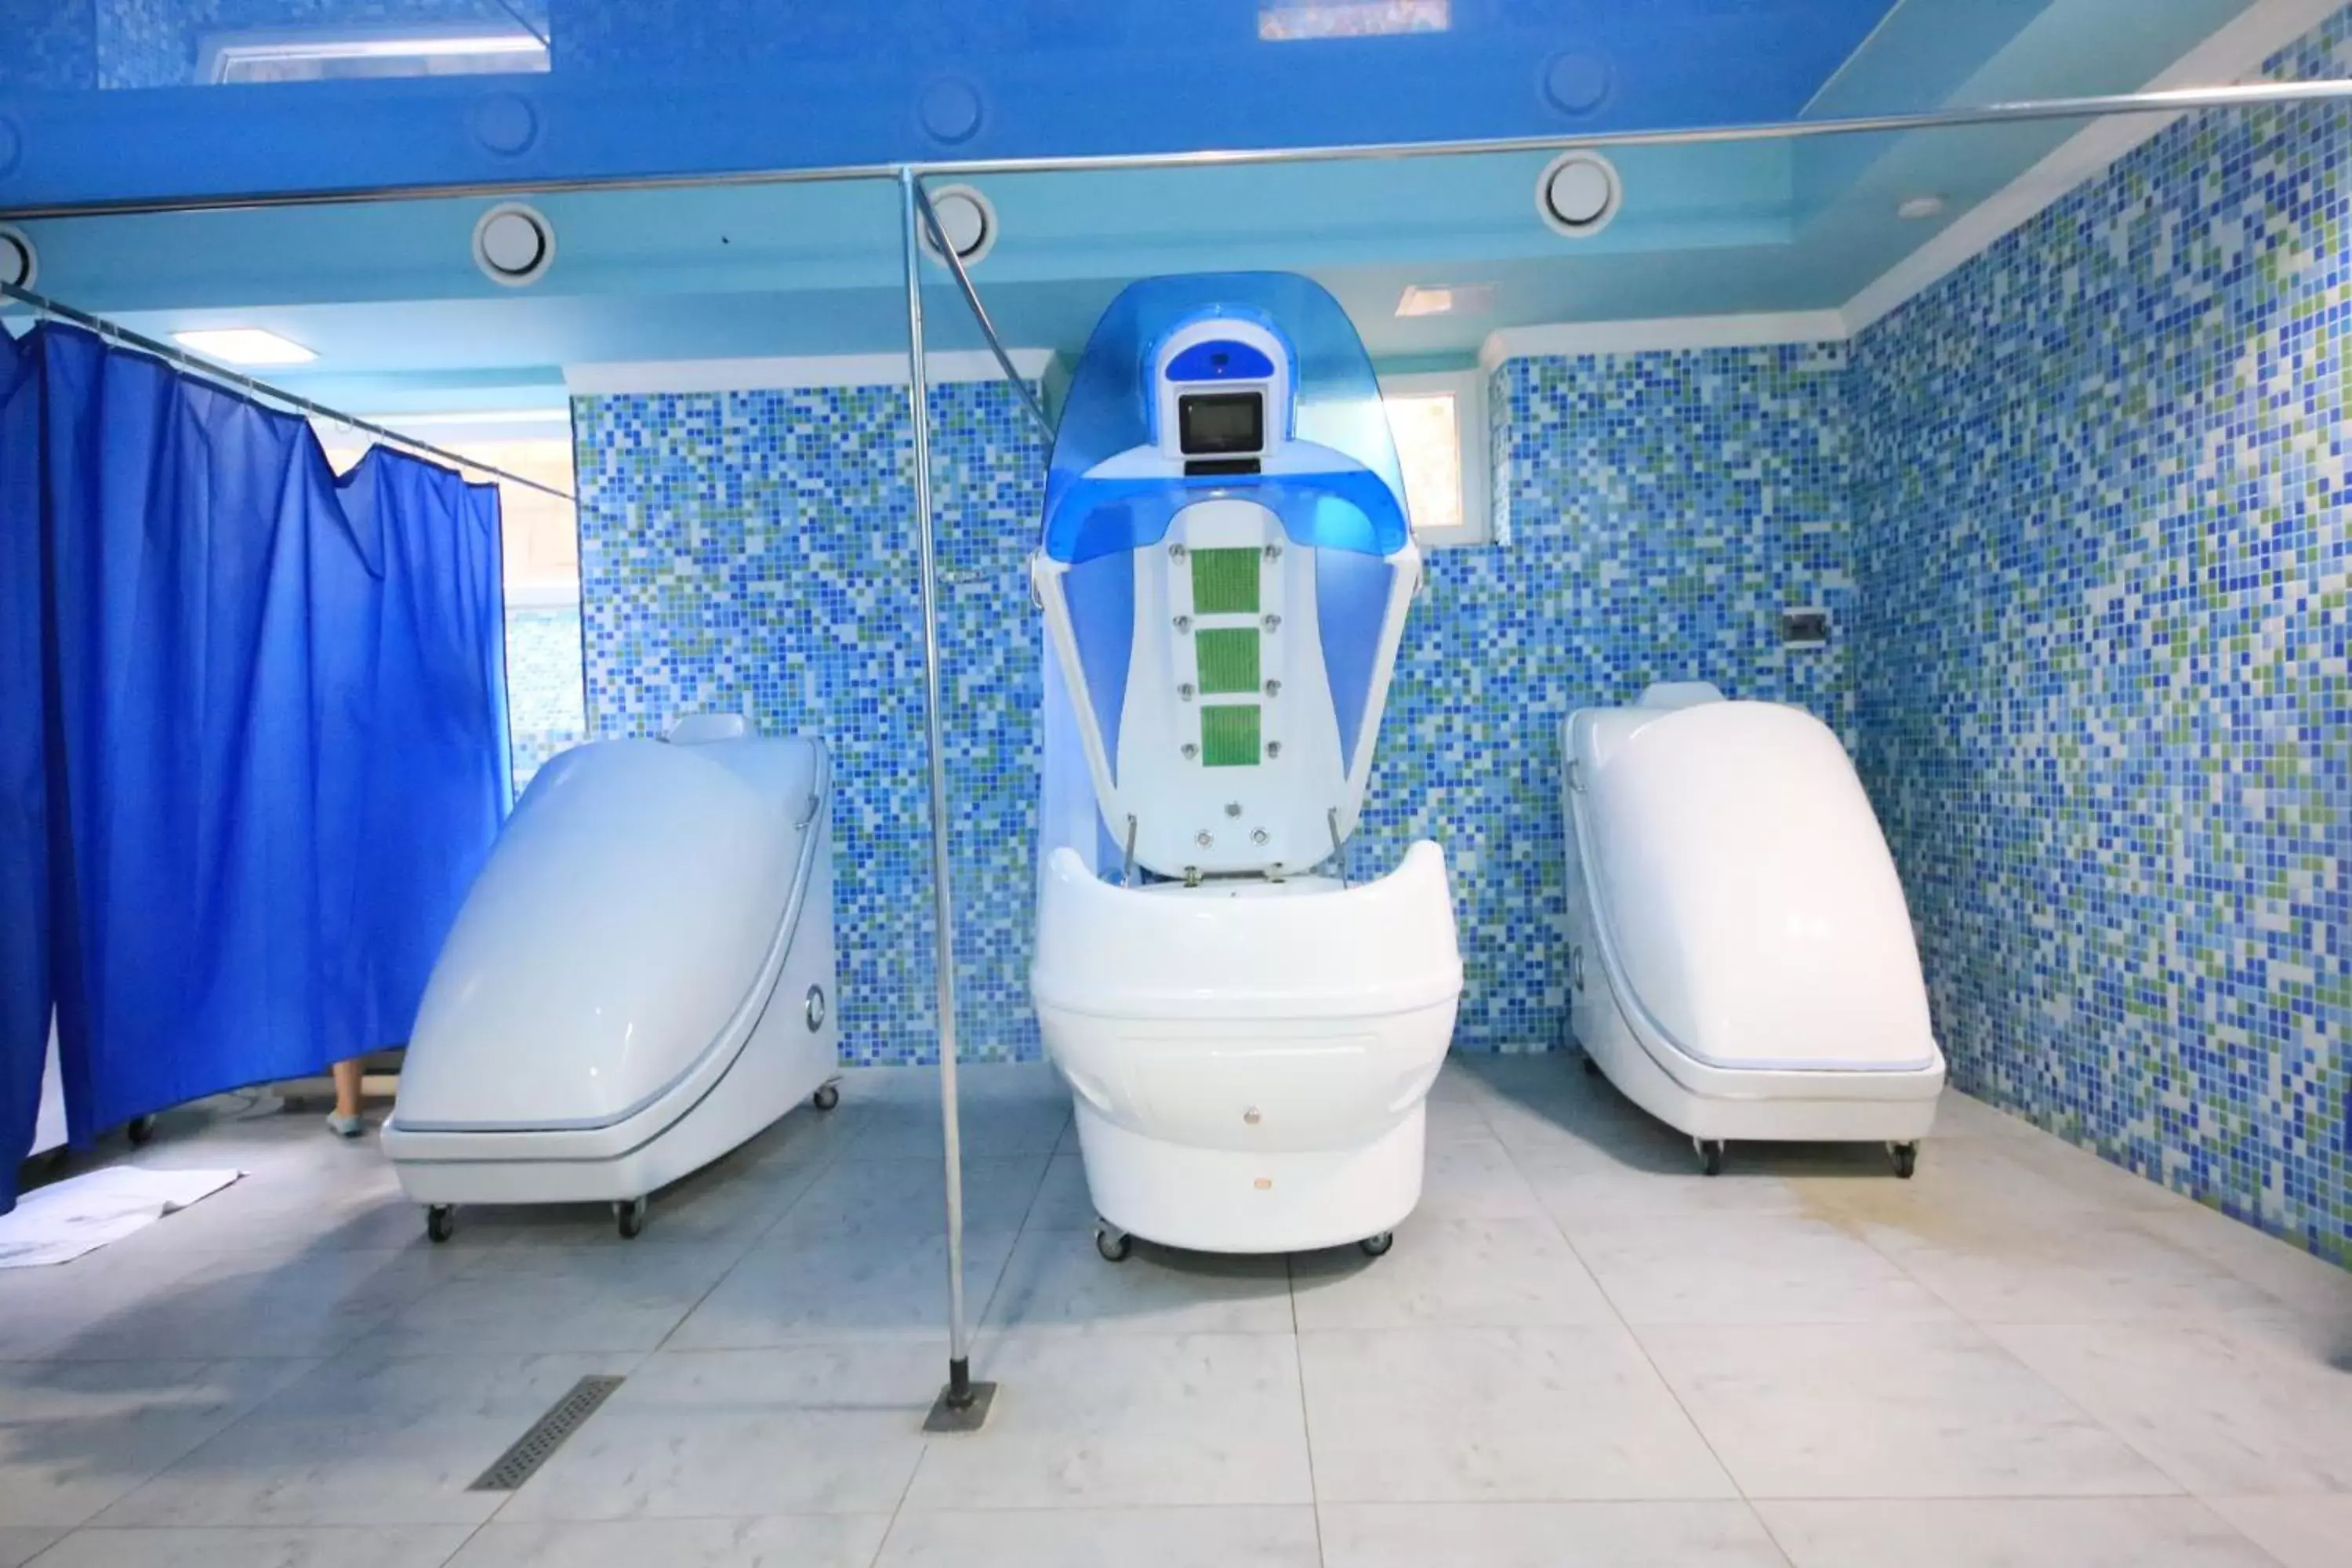 Spa and wellness centre/facilities, Bathroom in Borjomi Palace Health & Spa Center